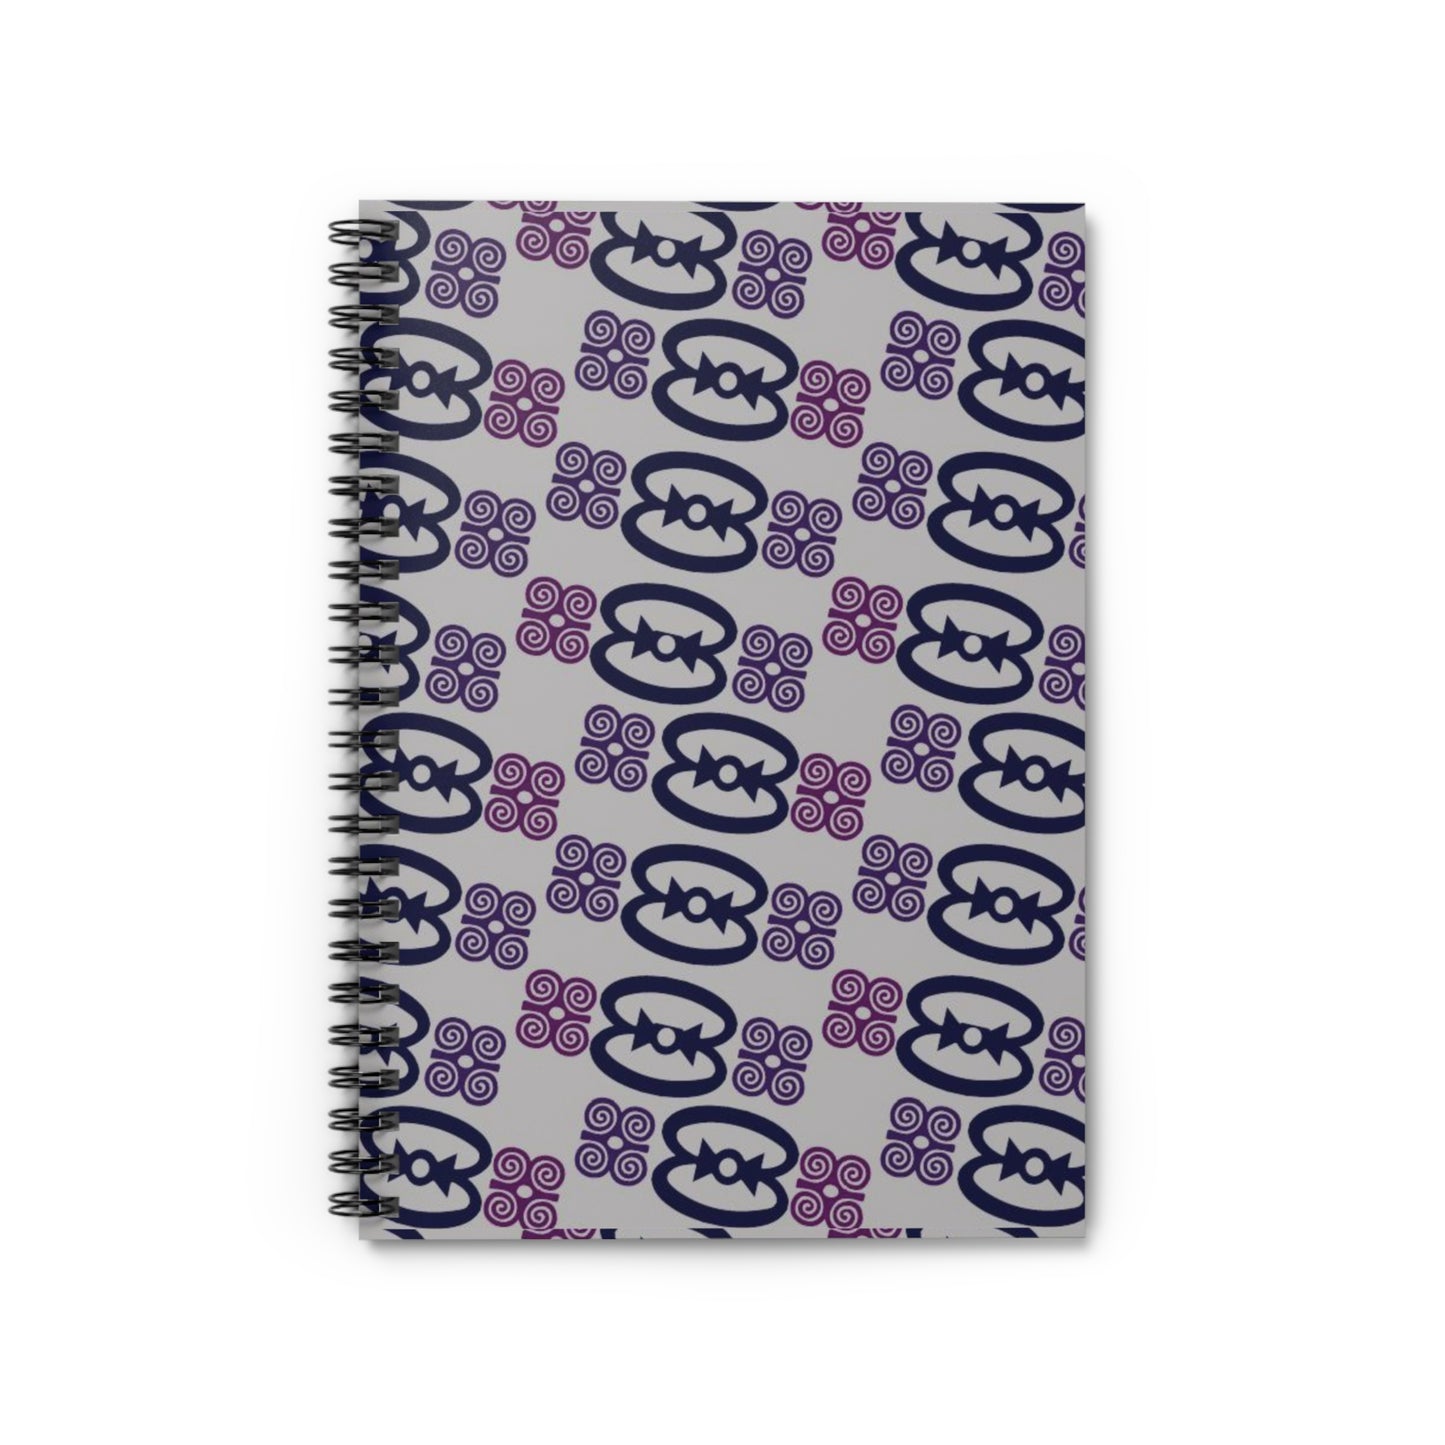 Adinkra Symbols Spiral Notebook - College Ruled Line 6"x8"